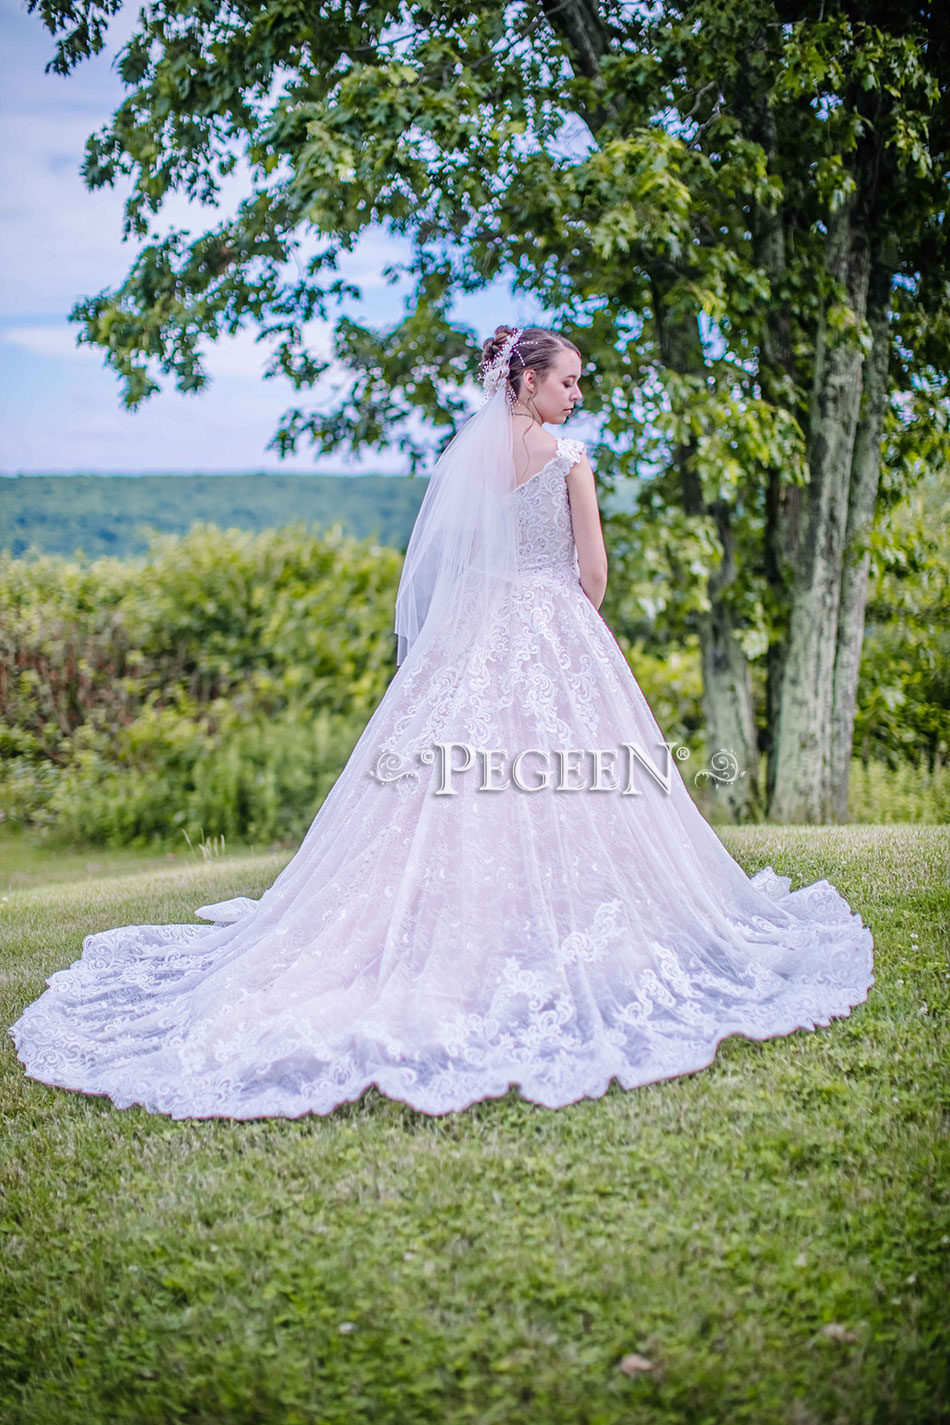 2022-2023 Wedding/Flower Girl Dress of the Year